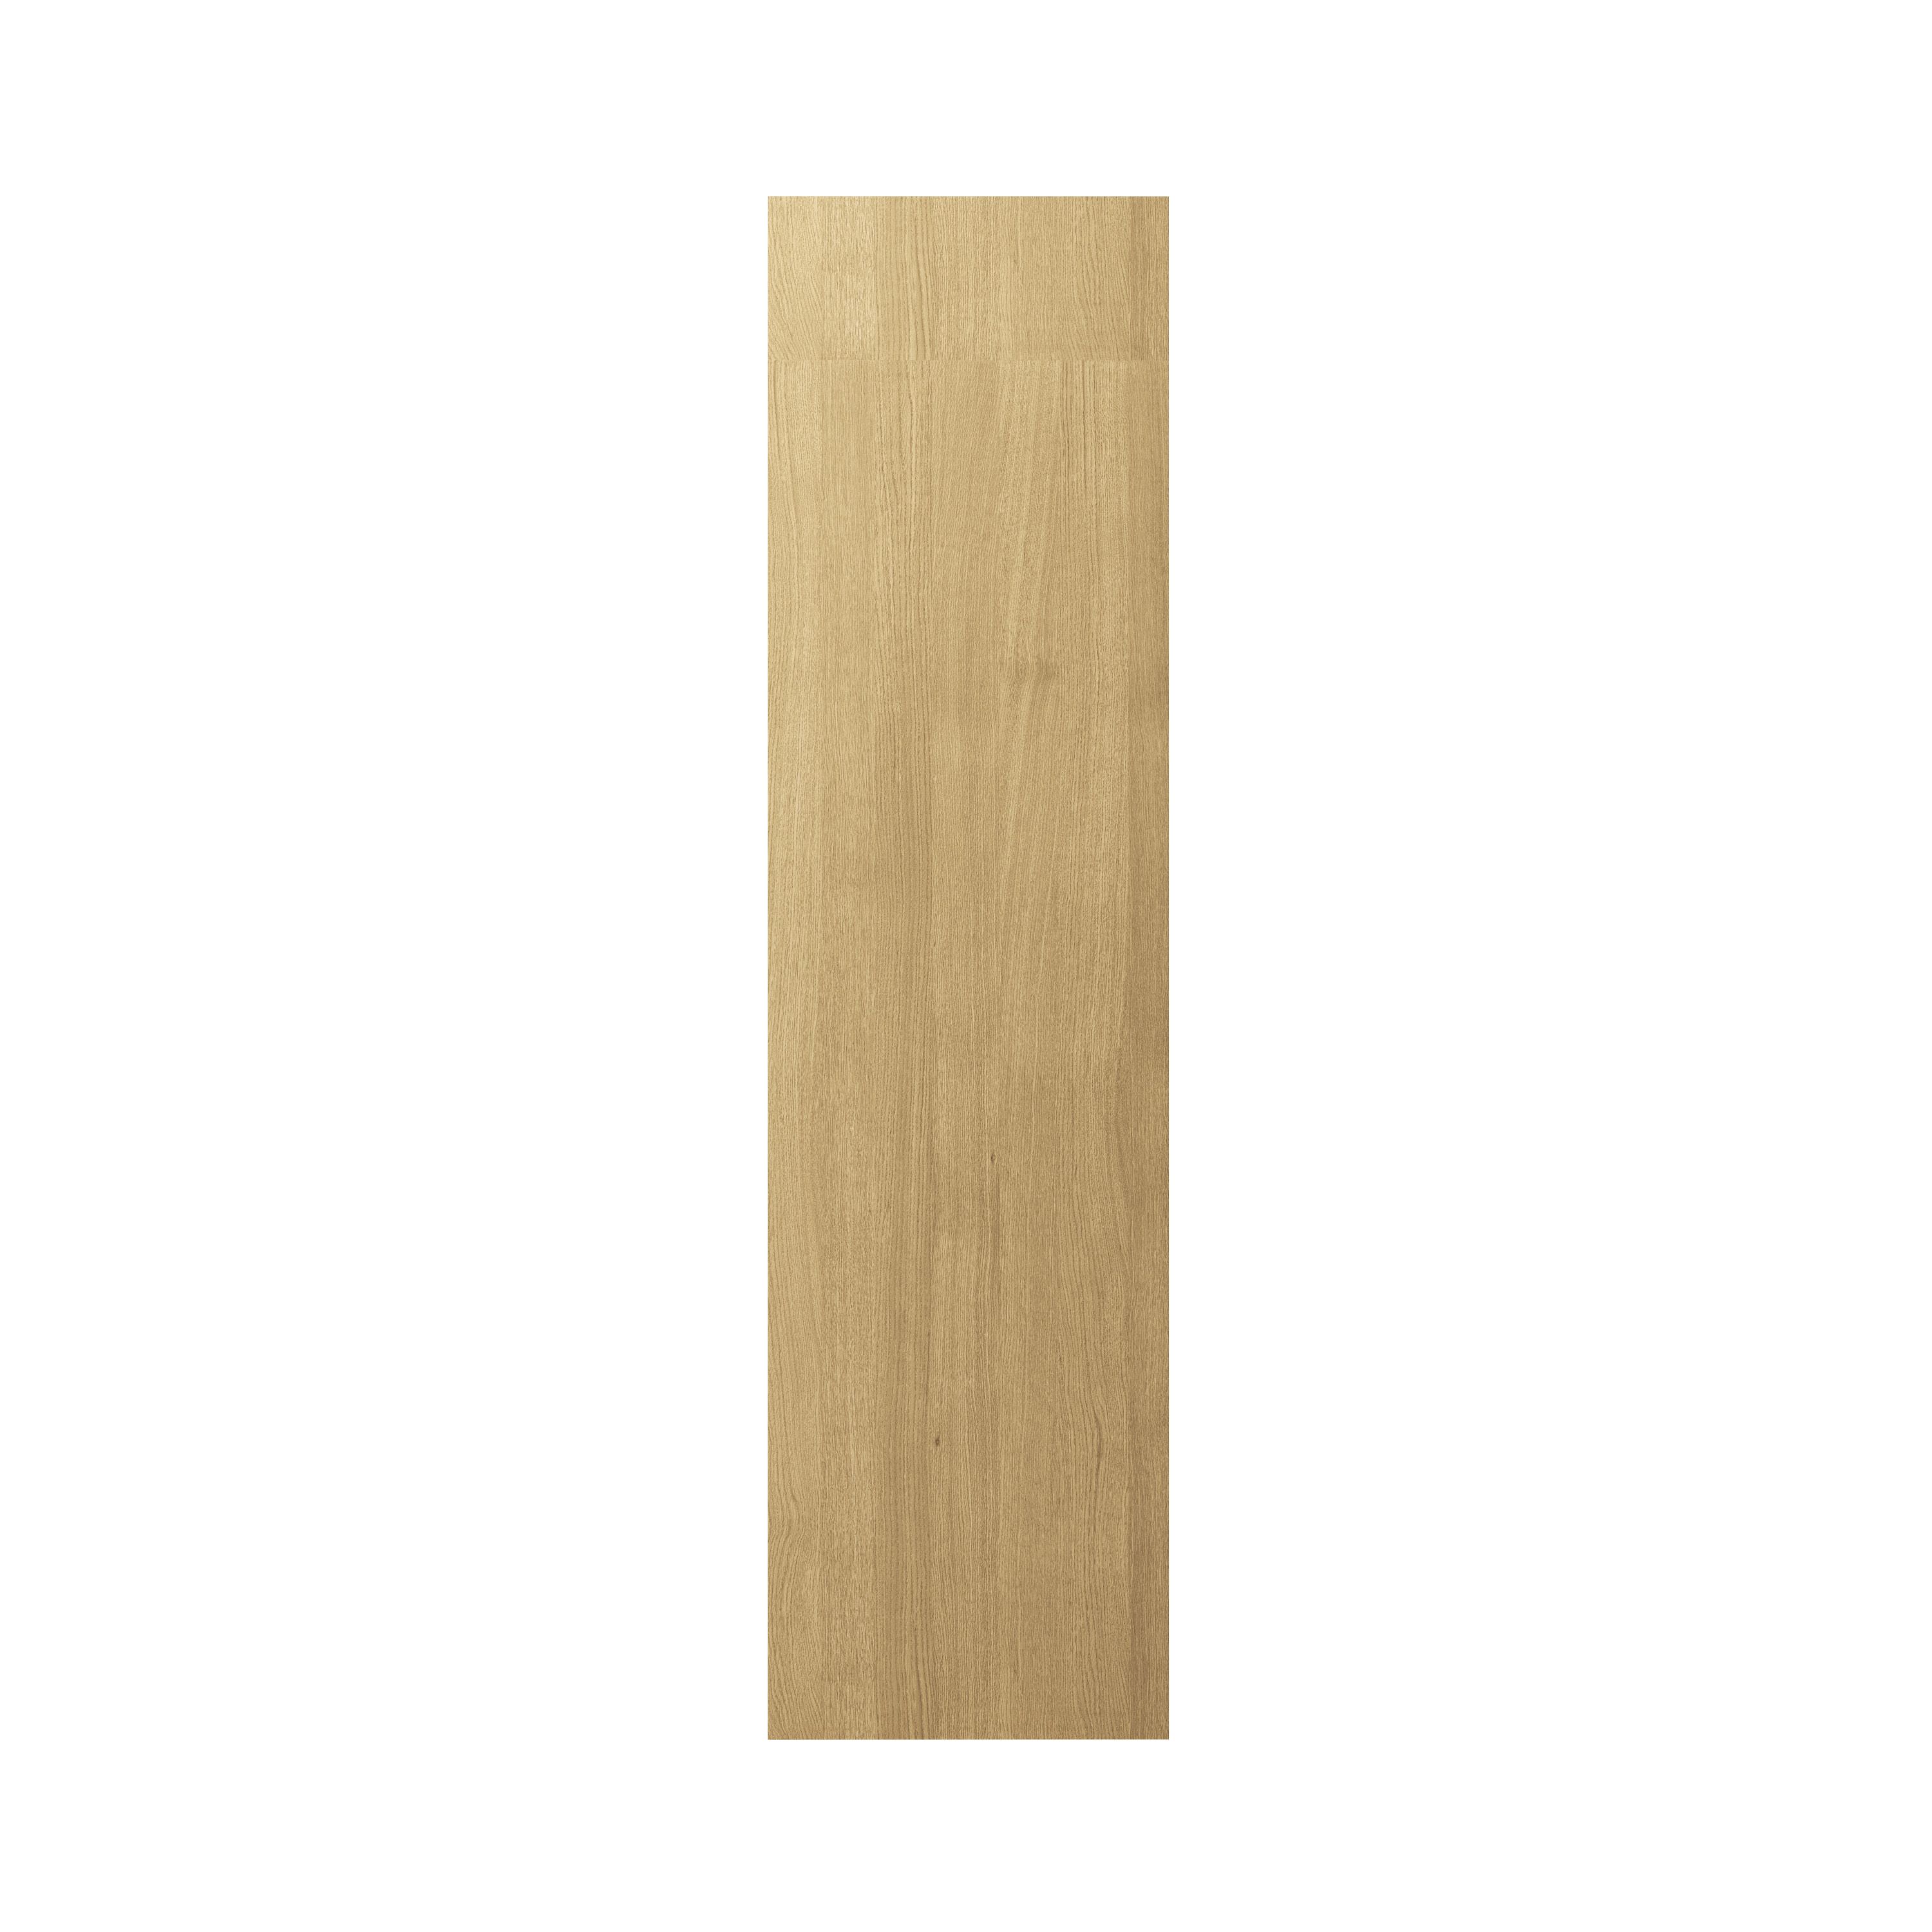 GoodHome Verbena Natural oak shaker Tall Appliance & larder End panel (H)2190mm (W)570mm, Pair